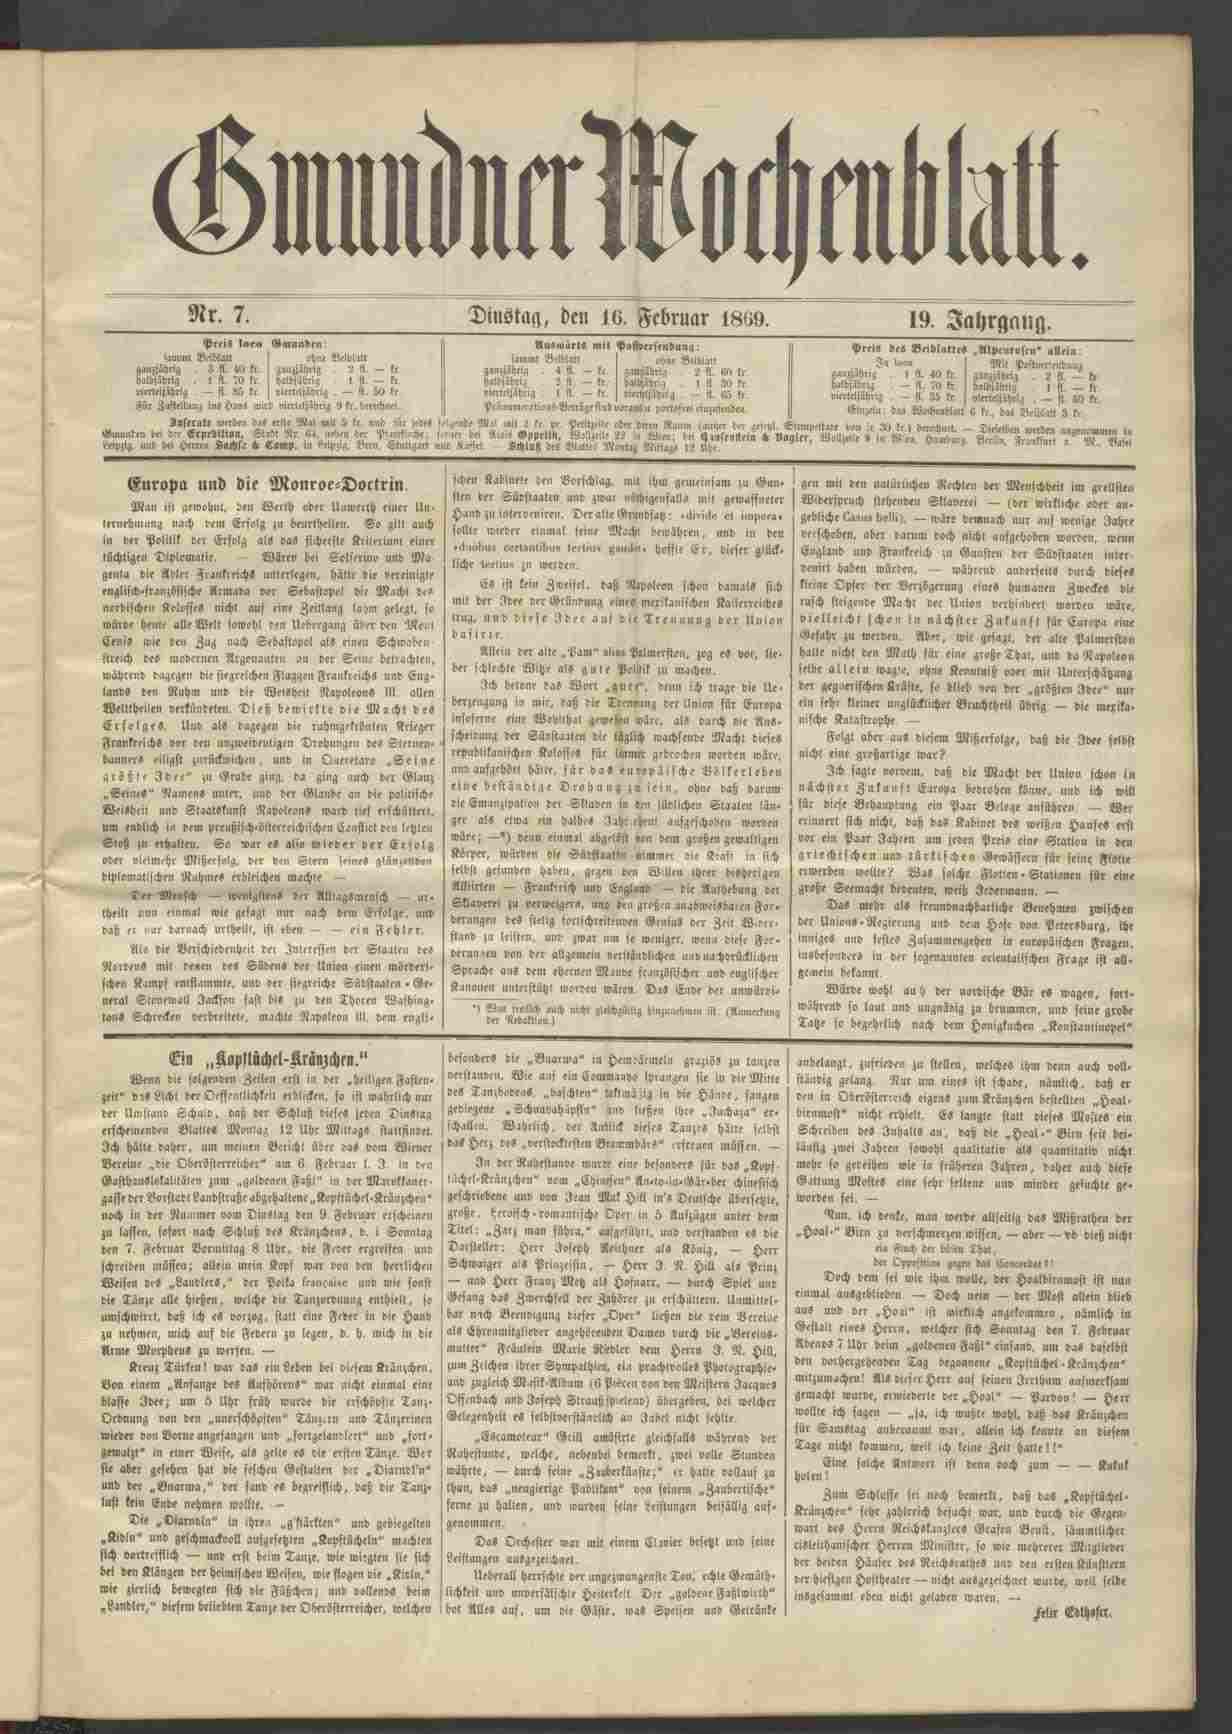 Gmundner Wochenblatt, 16.2.1869, S.1, ANNO/ÖNB